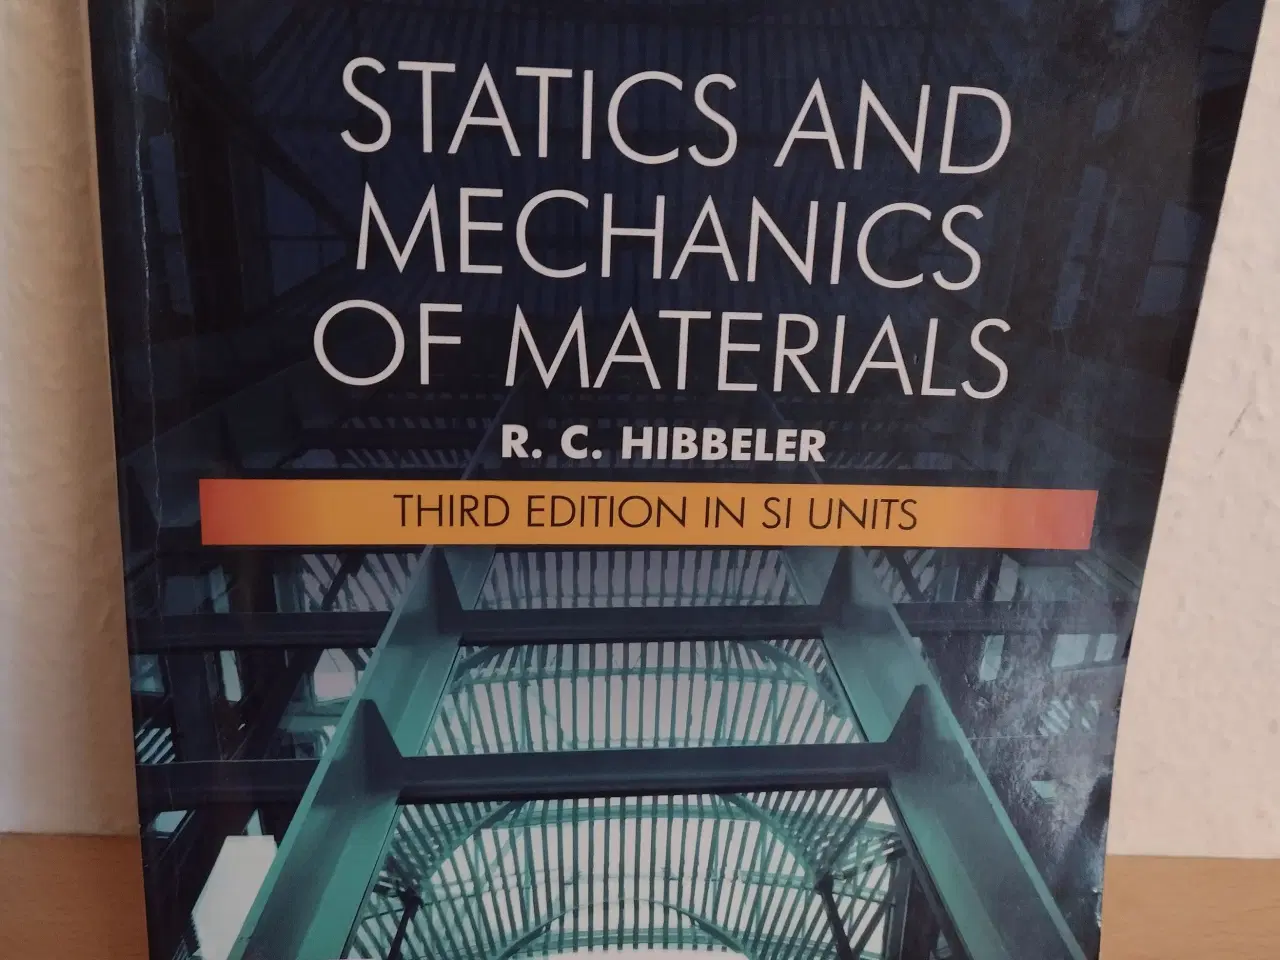 Billede 1 - Statics and mechanics of materials